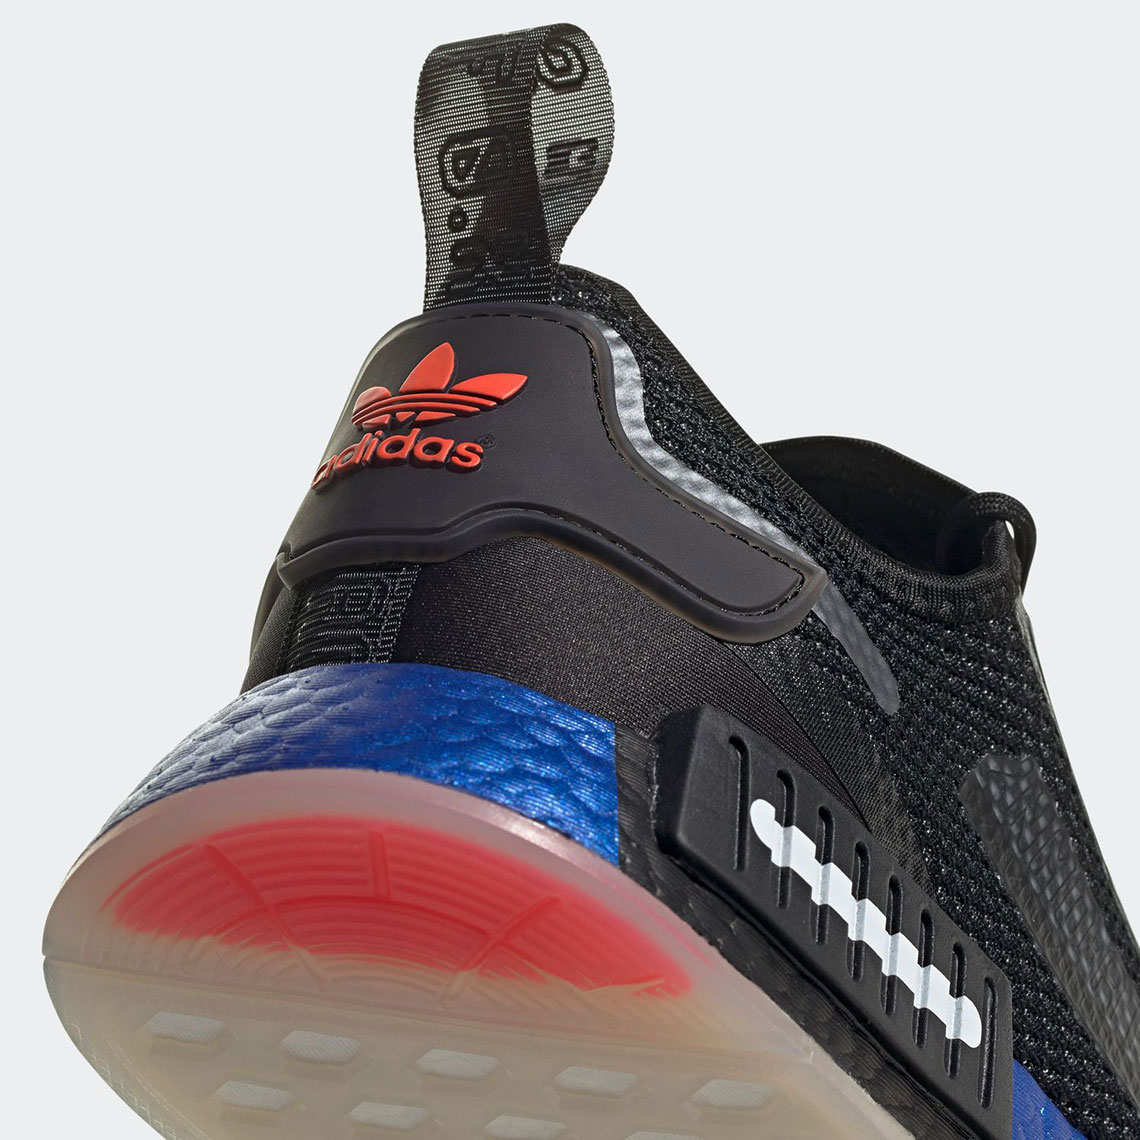 Meer Bont medeleerling NASA adidas NMD R1 SPECTOO FX6818 FX6819 | SneakerNews.com